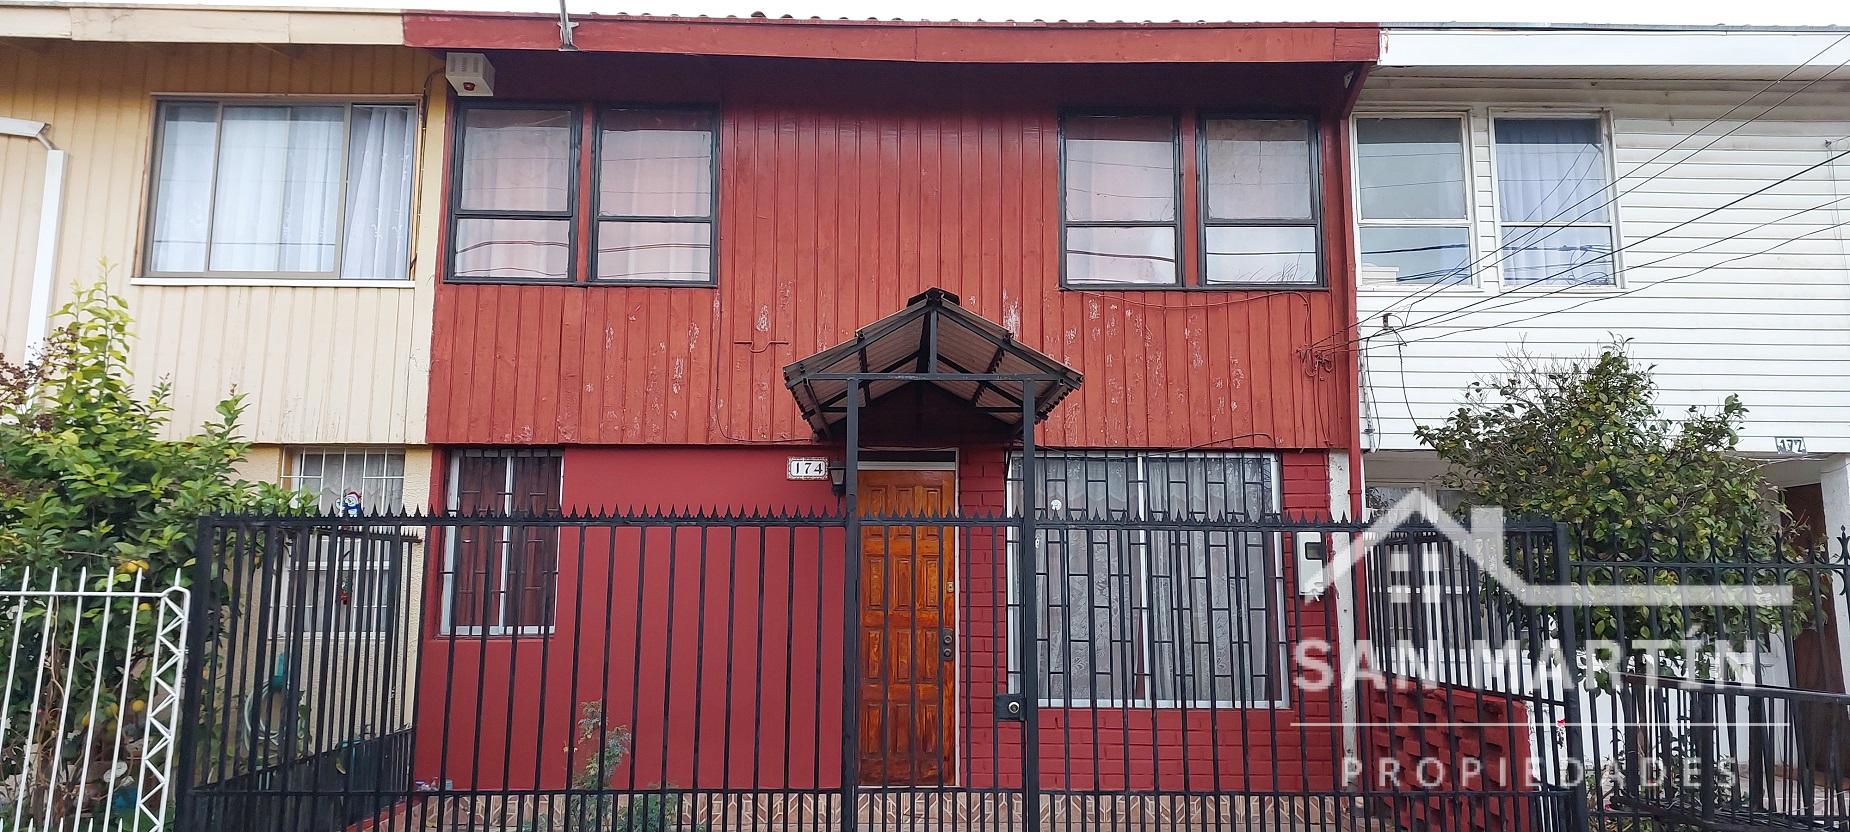 Se vende casa sector Abate Molina, Talca